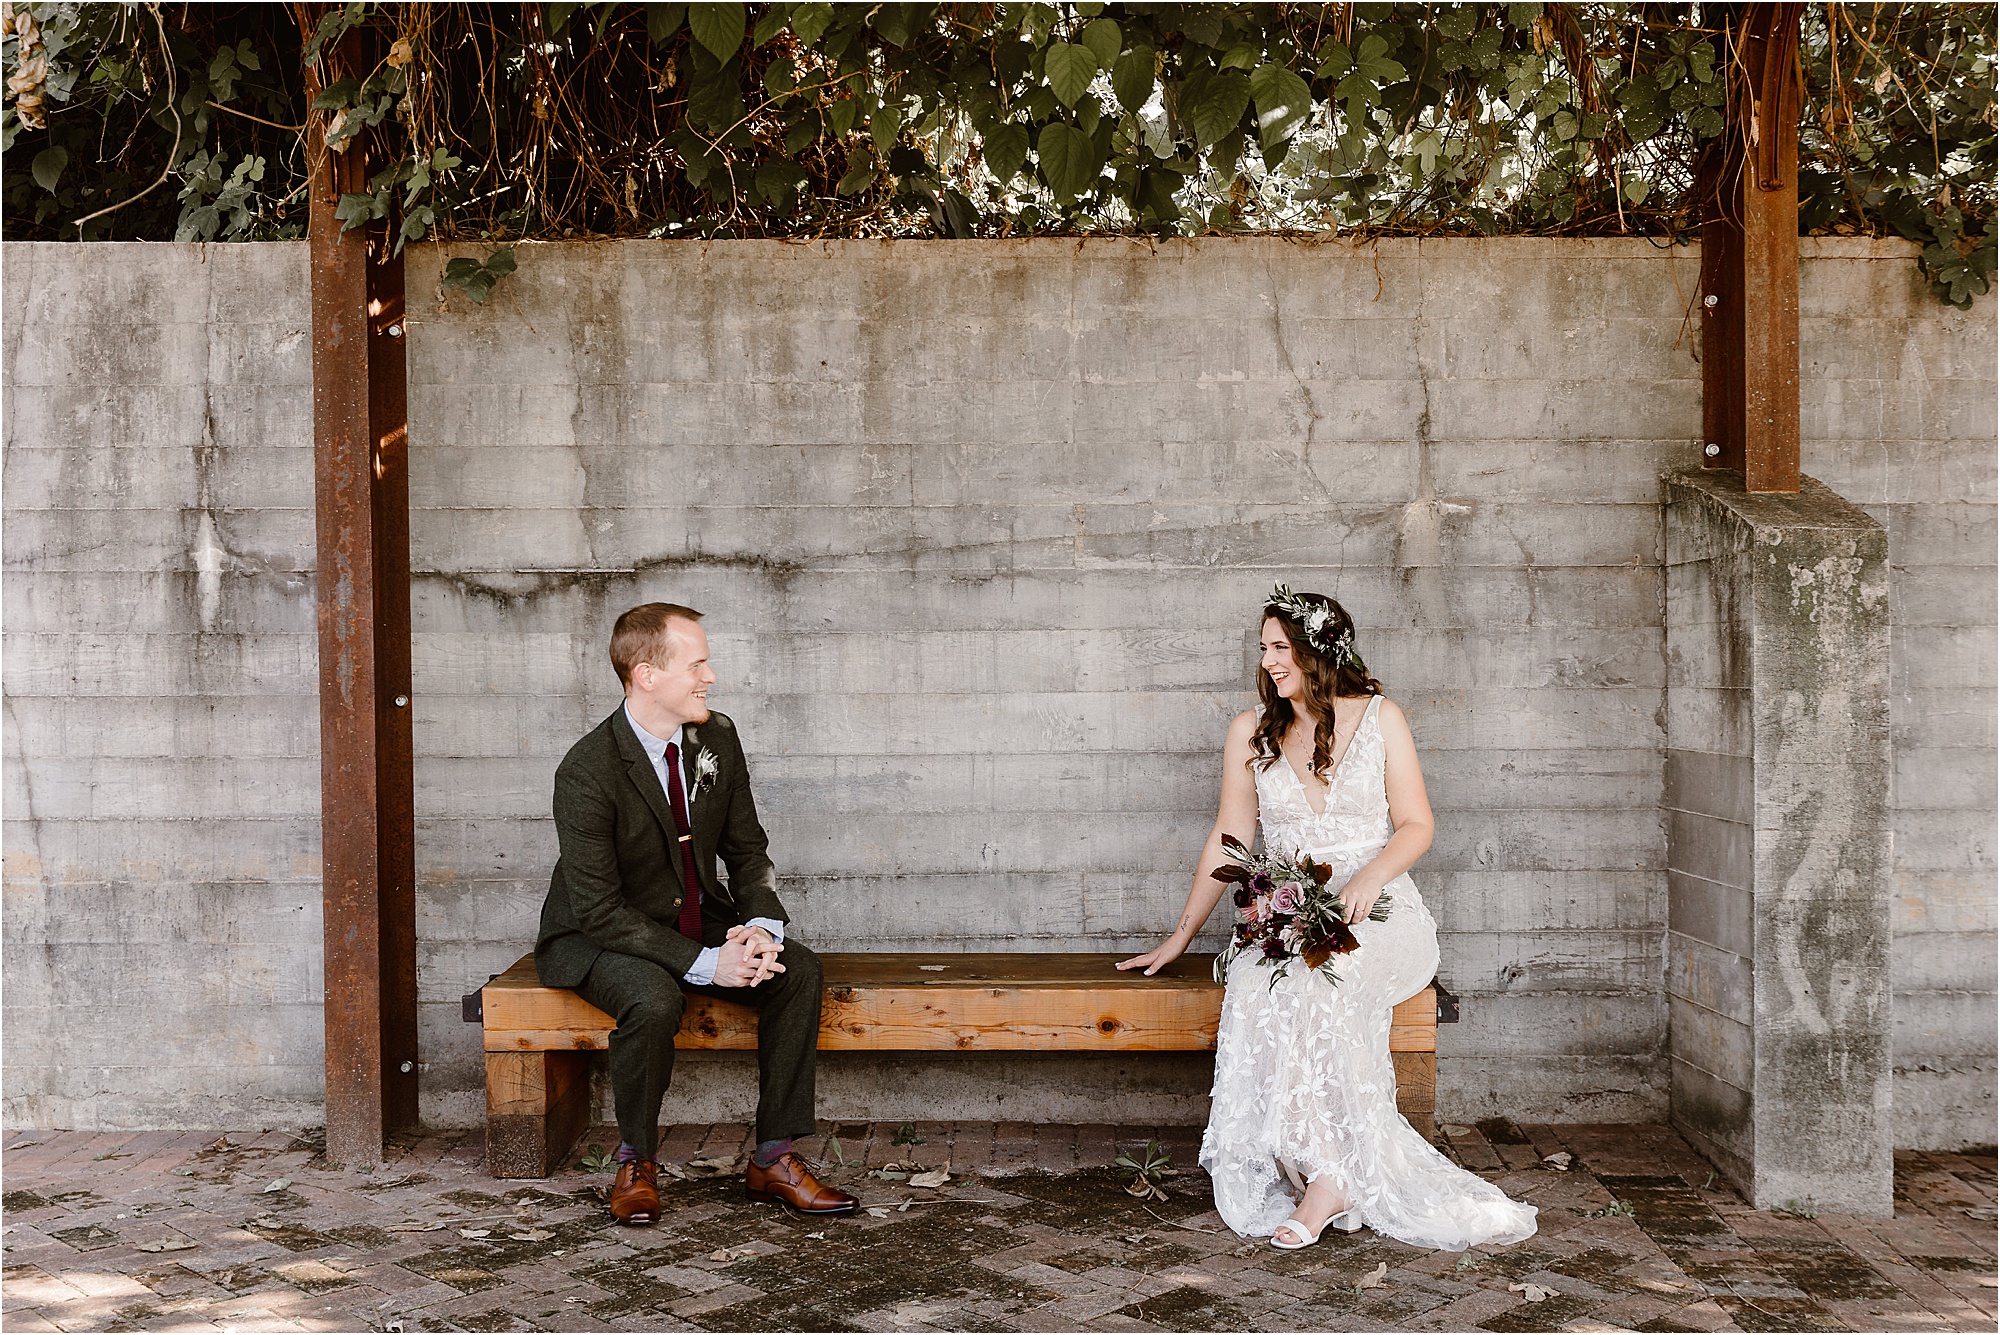 man in tweed jacket sits on bench opposite side of woman in sleeveless white wedding dress wearing flower crown